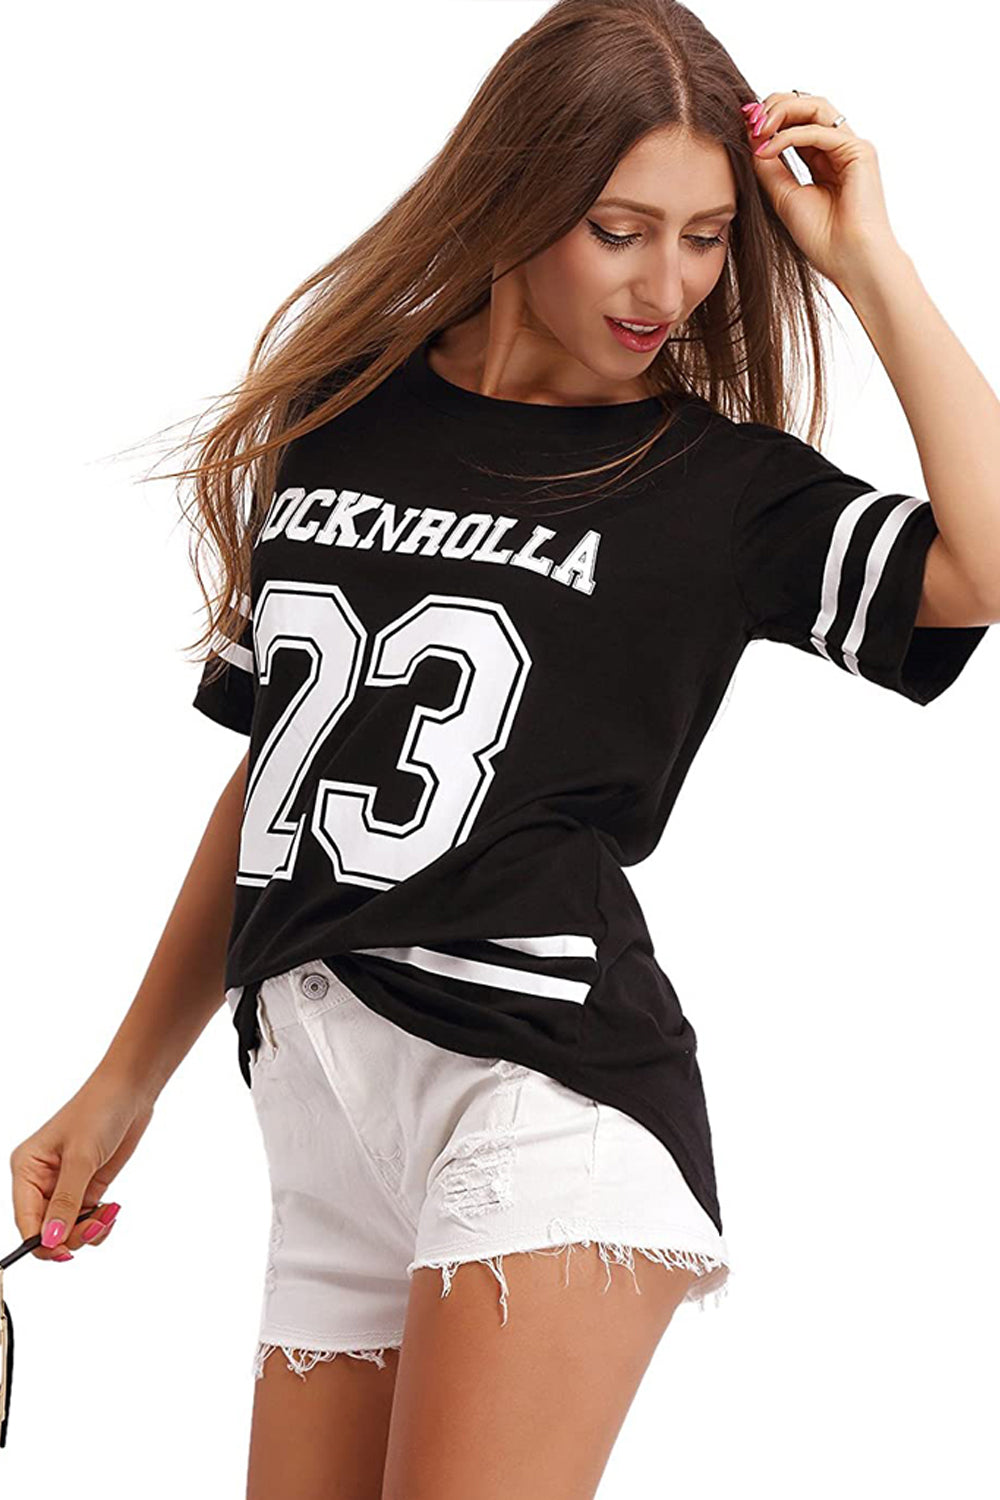 Rock N Roll Football Oversized T-shirt